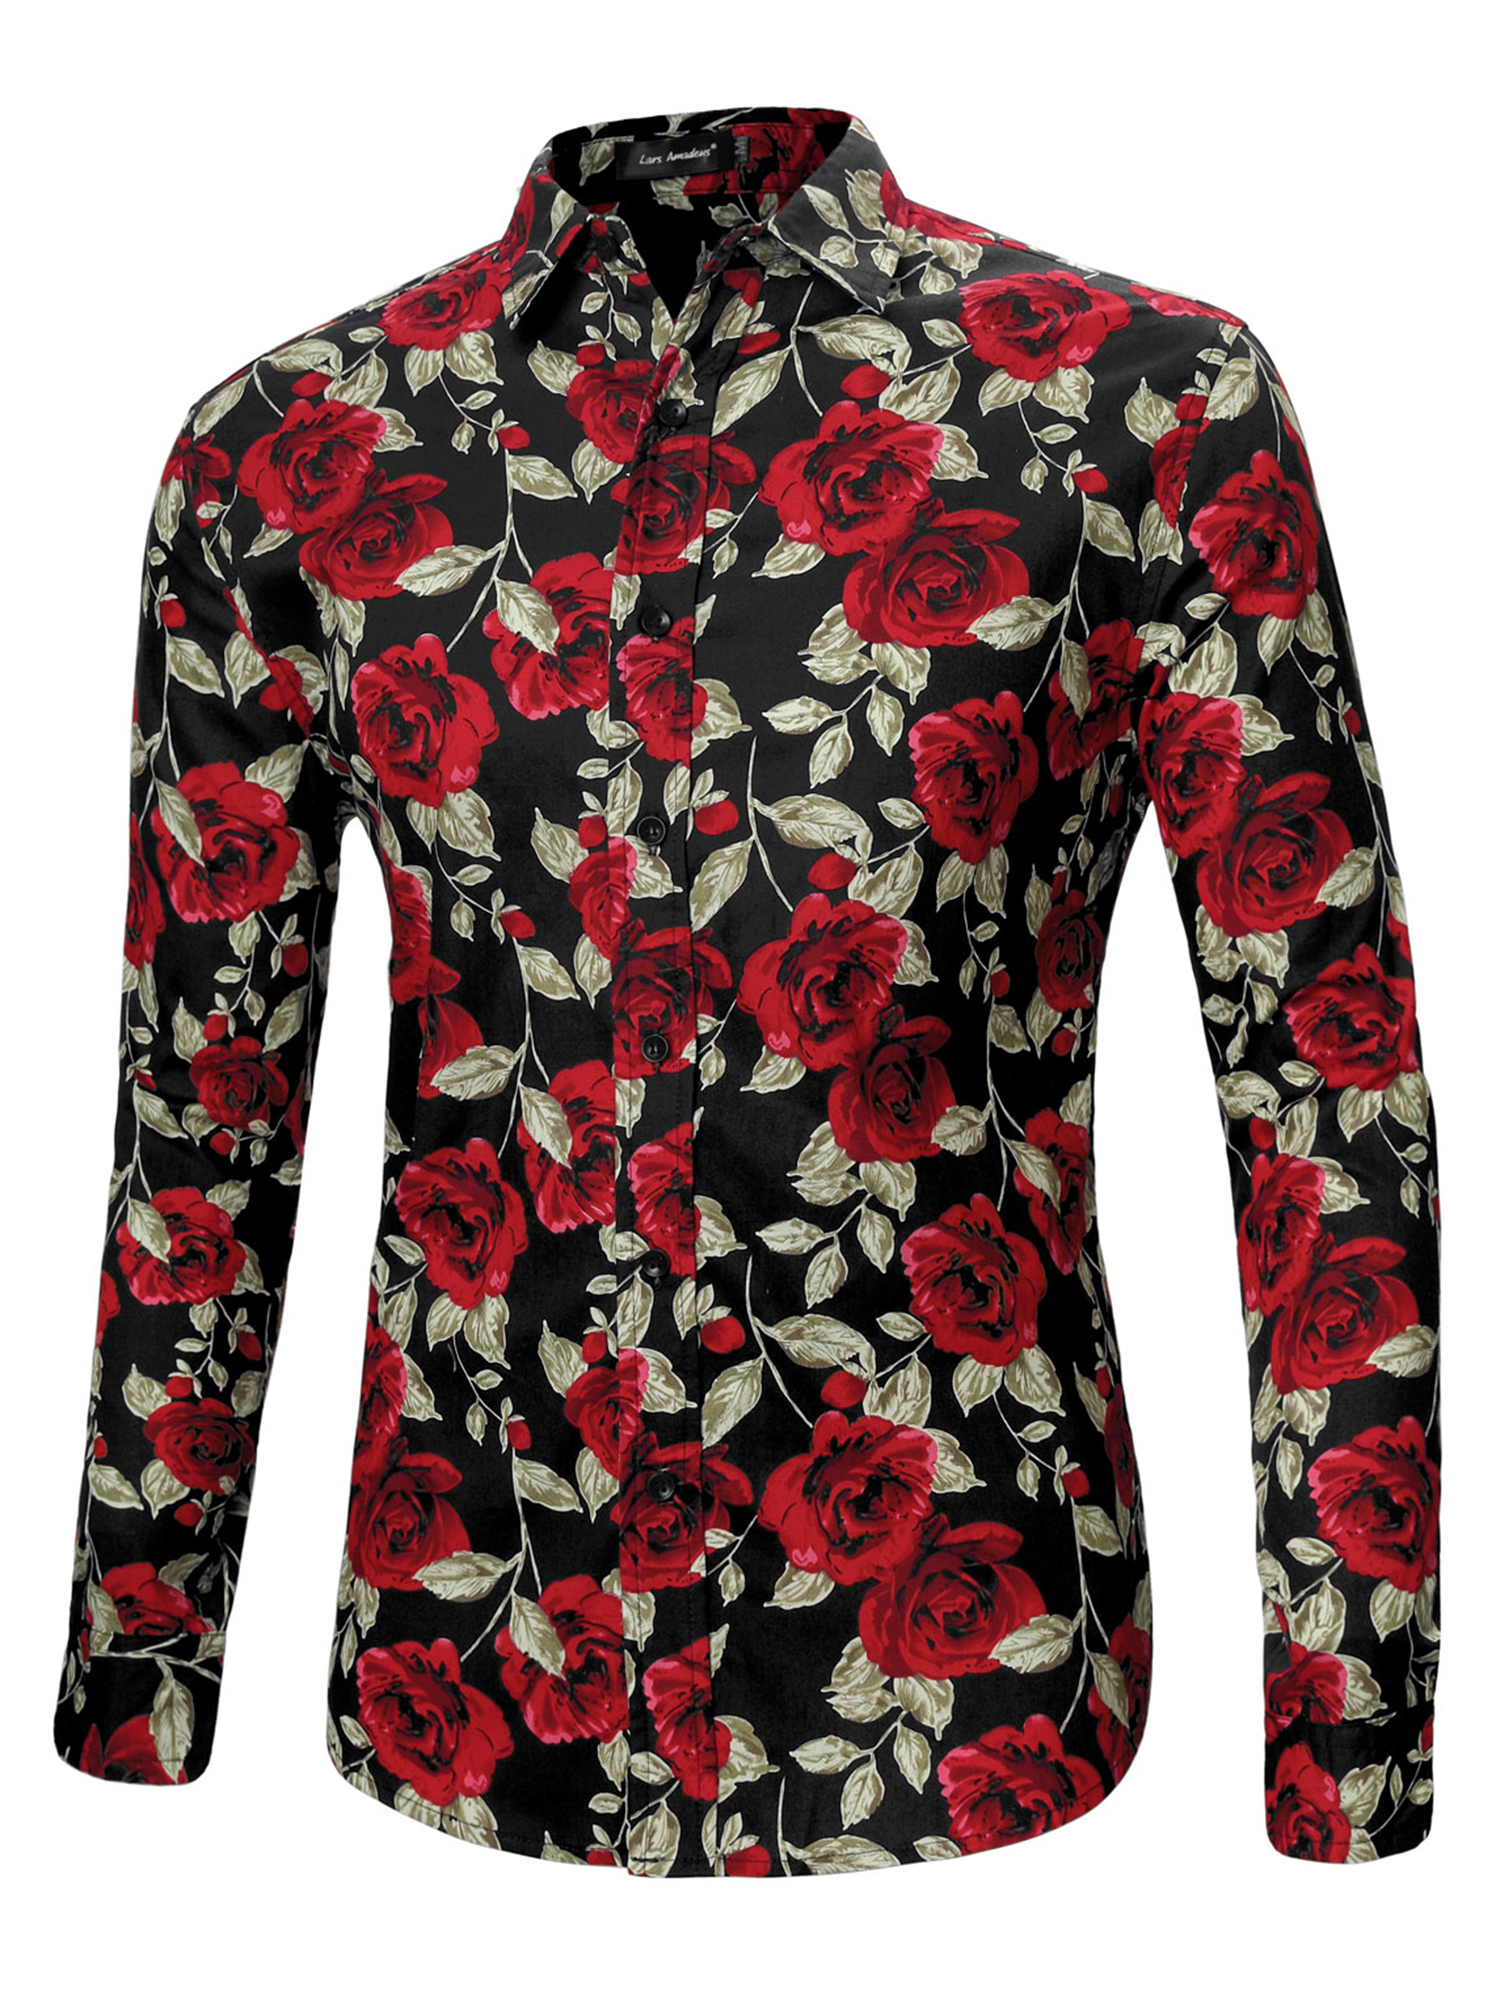 MODA NOVA Big & Tall Men's Floral Point Collar Long Sleeve Hawaiian Shirt Black Rose 3XLT - image 1 of 6